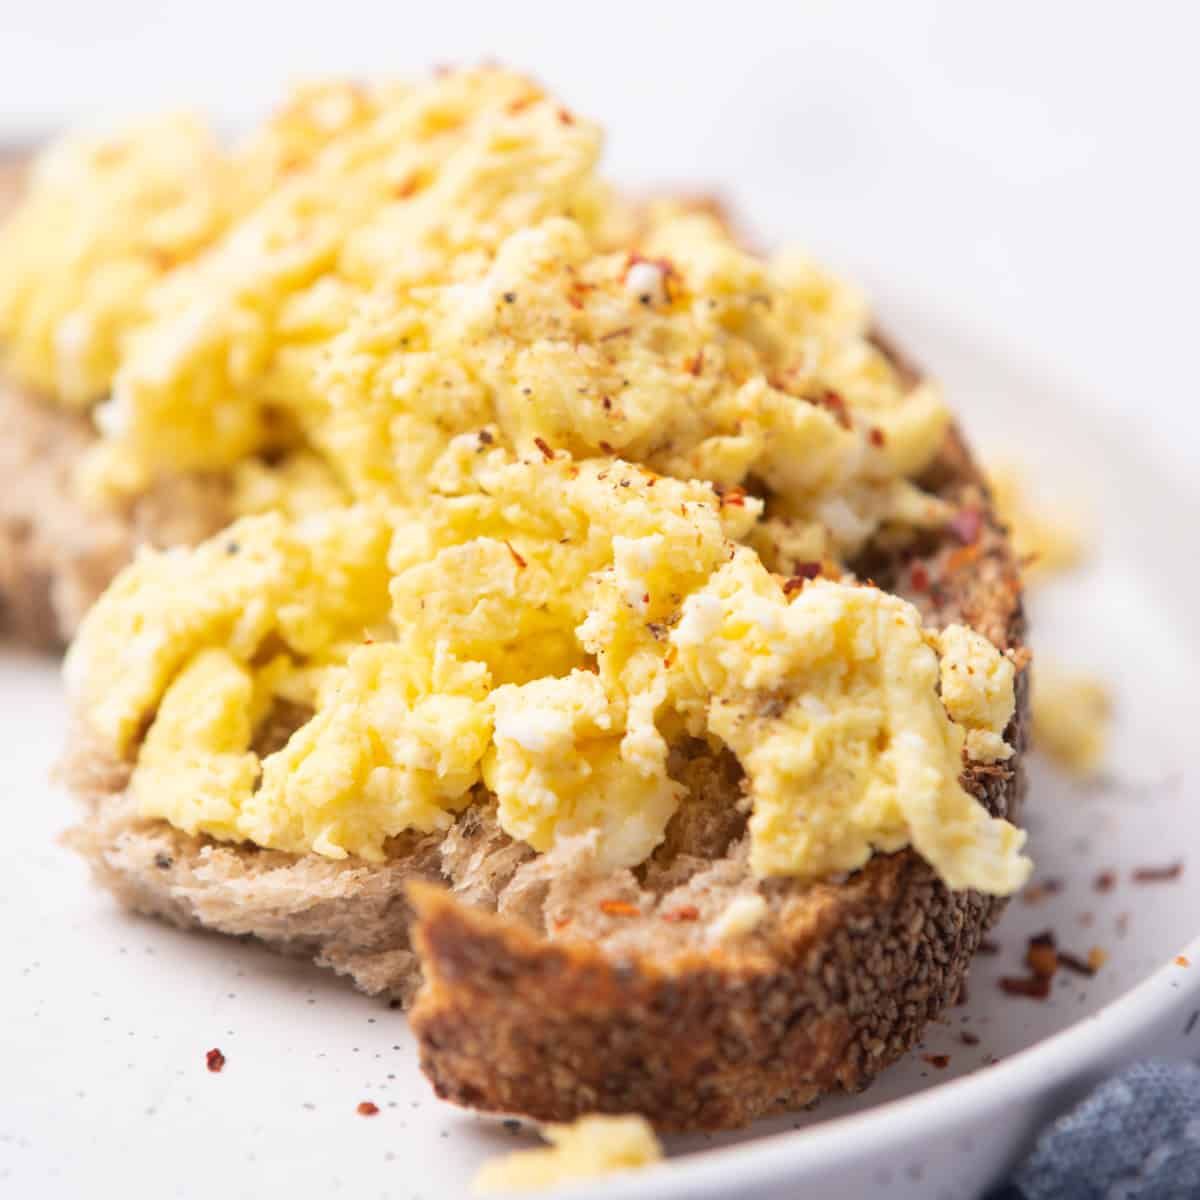 https://urbanfarmie.com/wp-content/uploads/Microwave-Scrambled-Eggs-Square-Shot.jpg